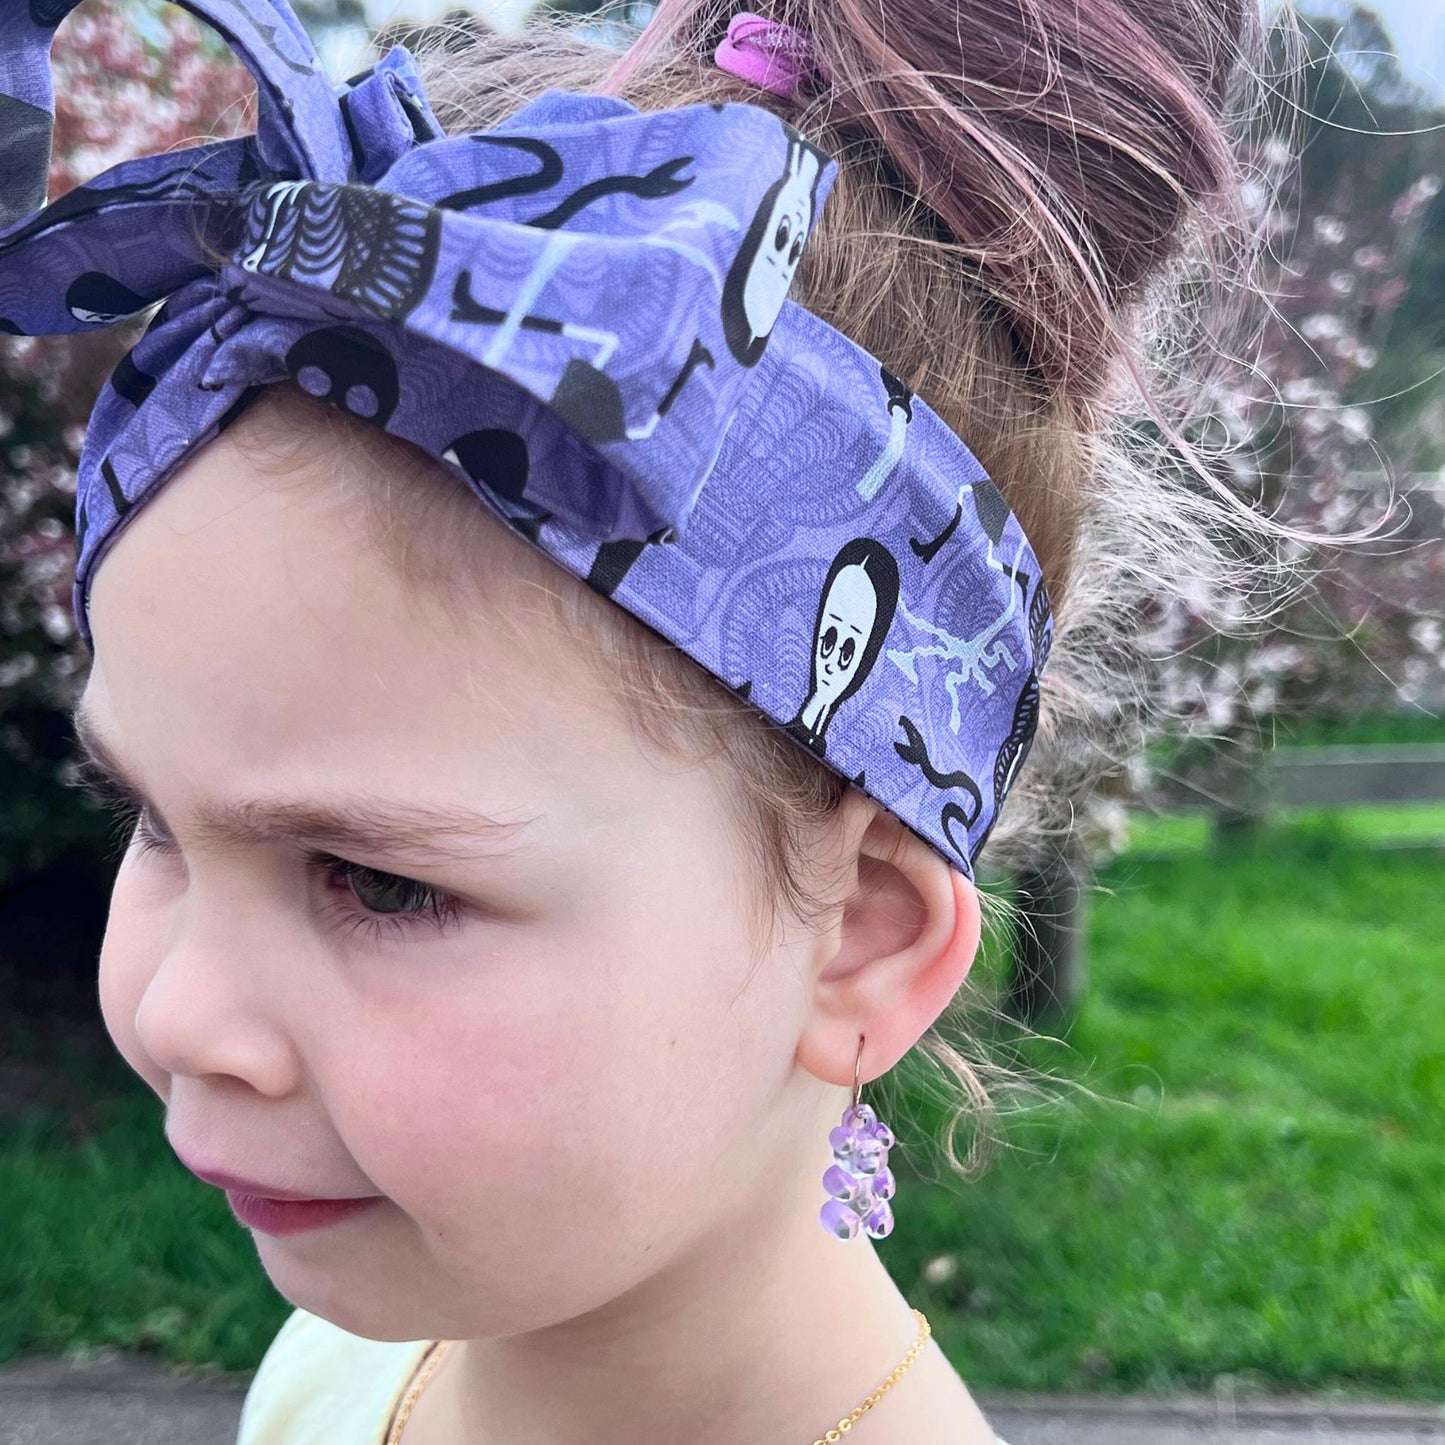 Gothic kids hair accessories handmade in Australia